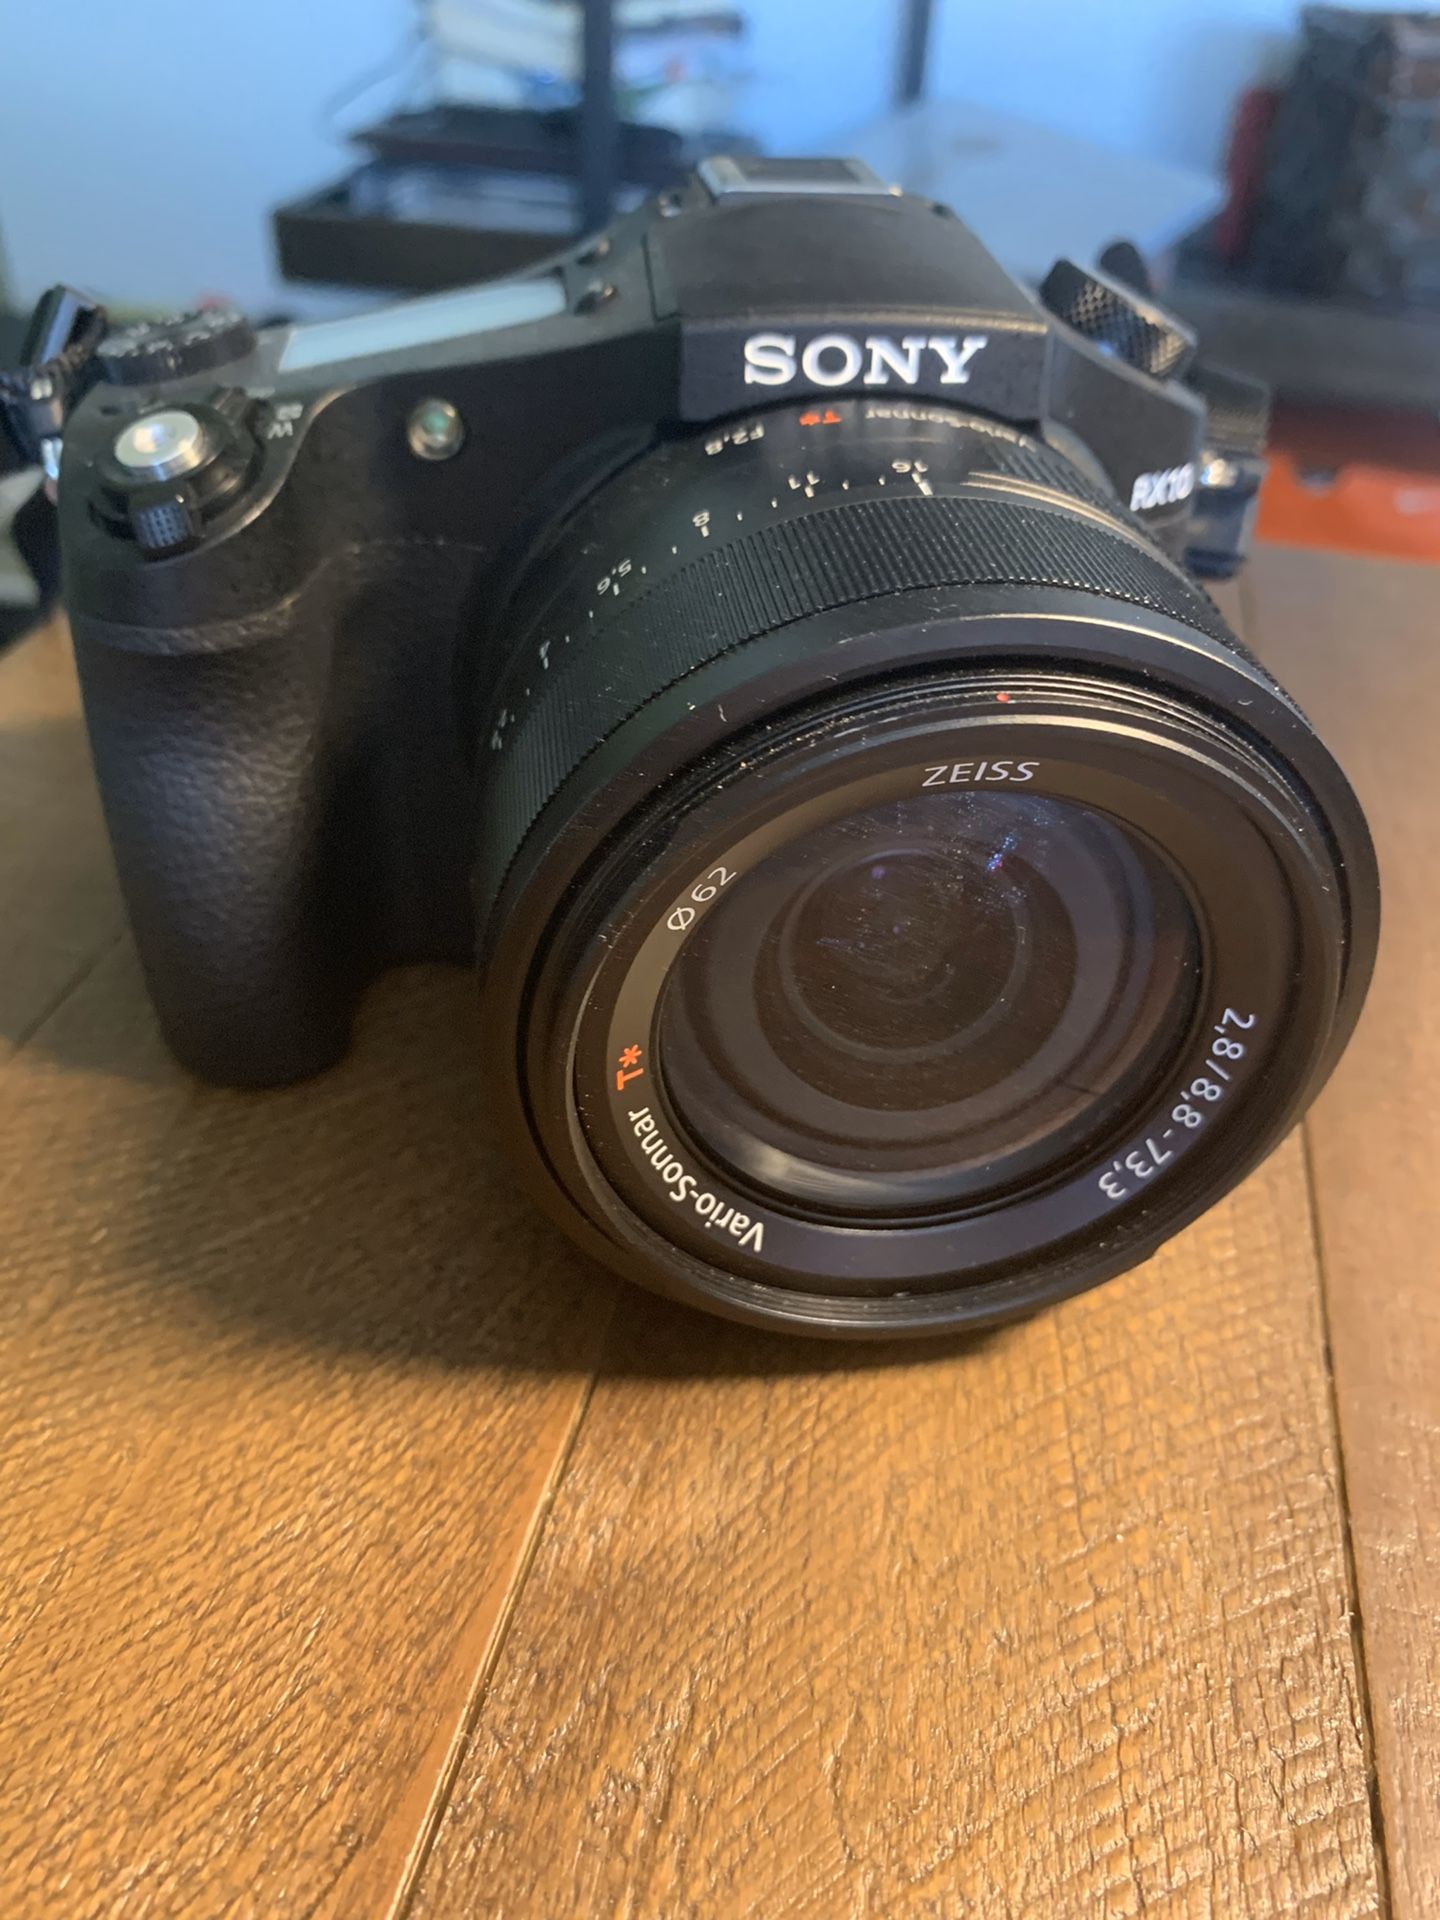 New Sony Cybershot RX 10 20.2 digital camera